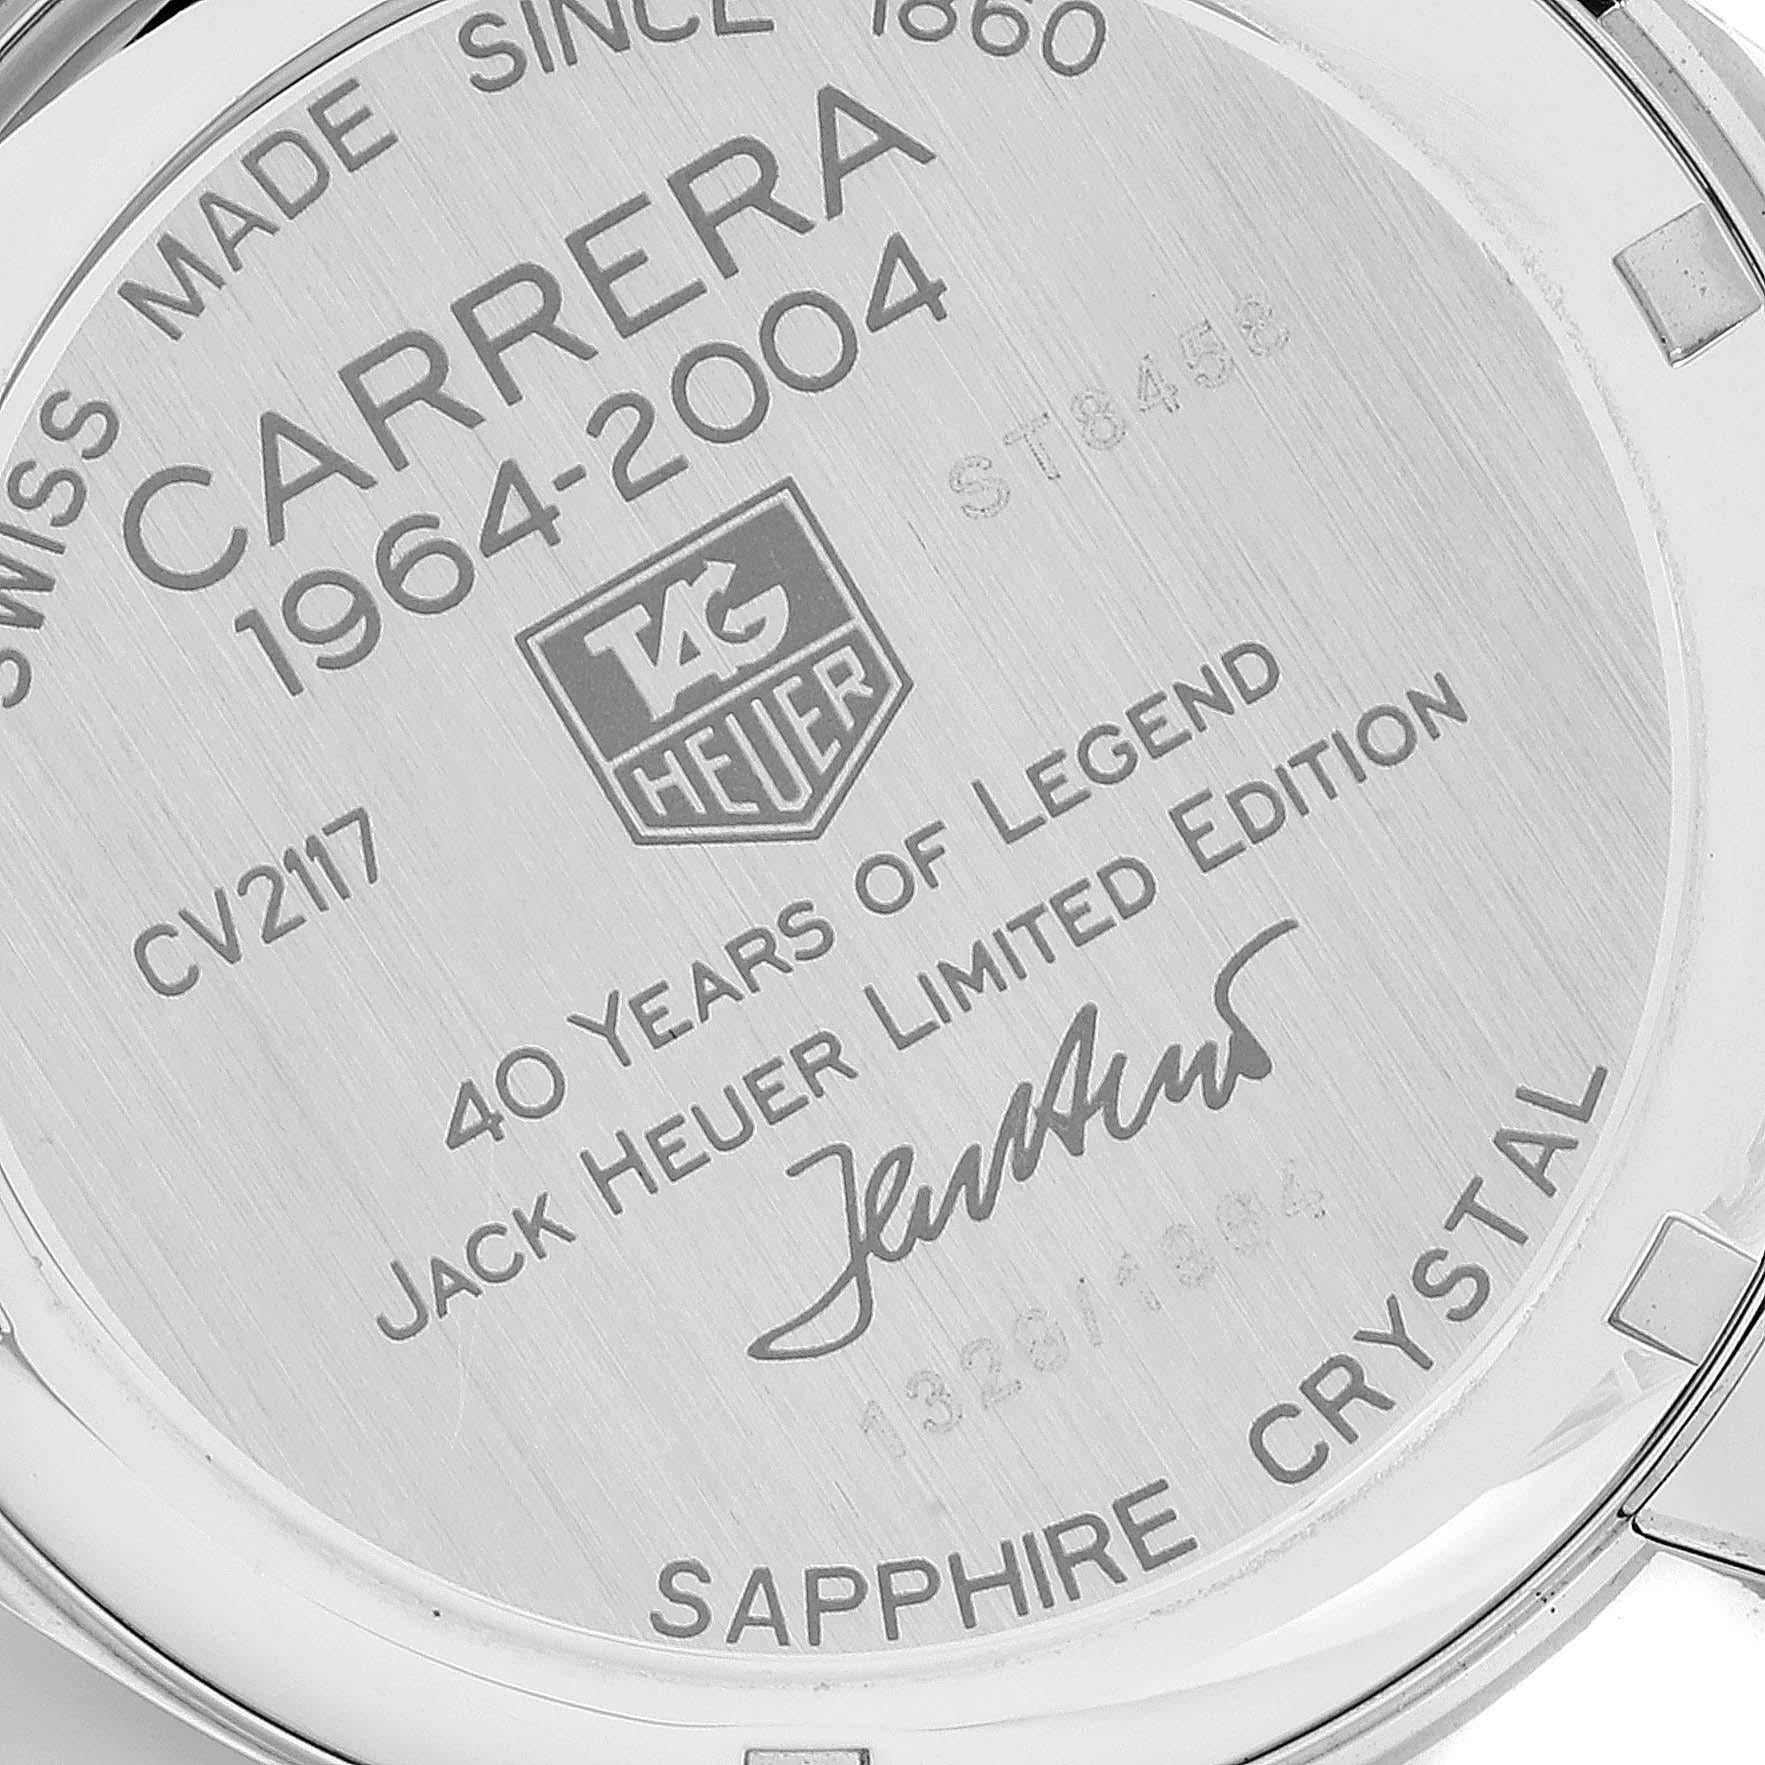 TAG Heuer Carrera Chronograph Limited Edition Men's Watch CV2117 Box Card 1